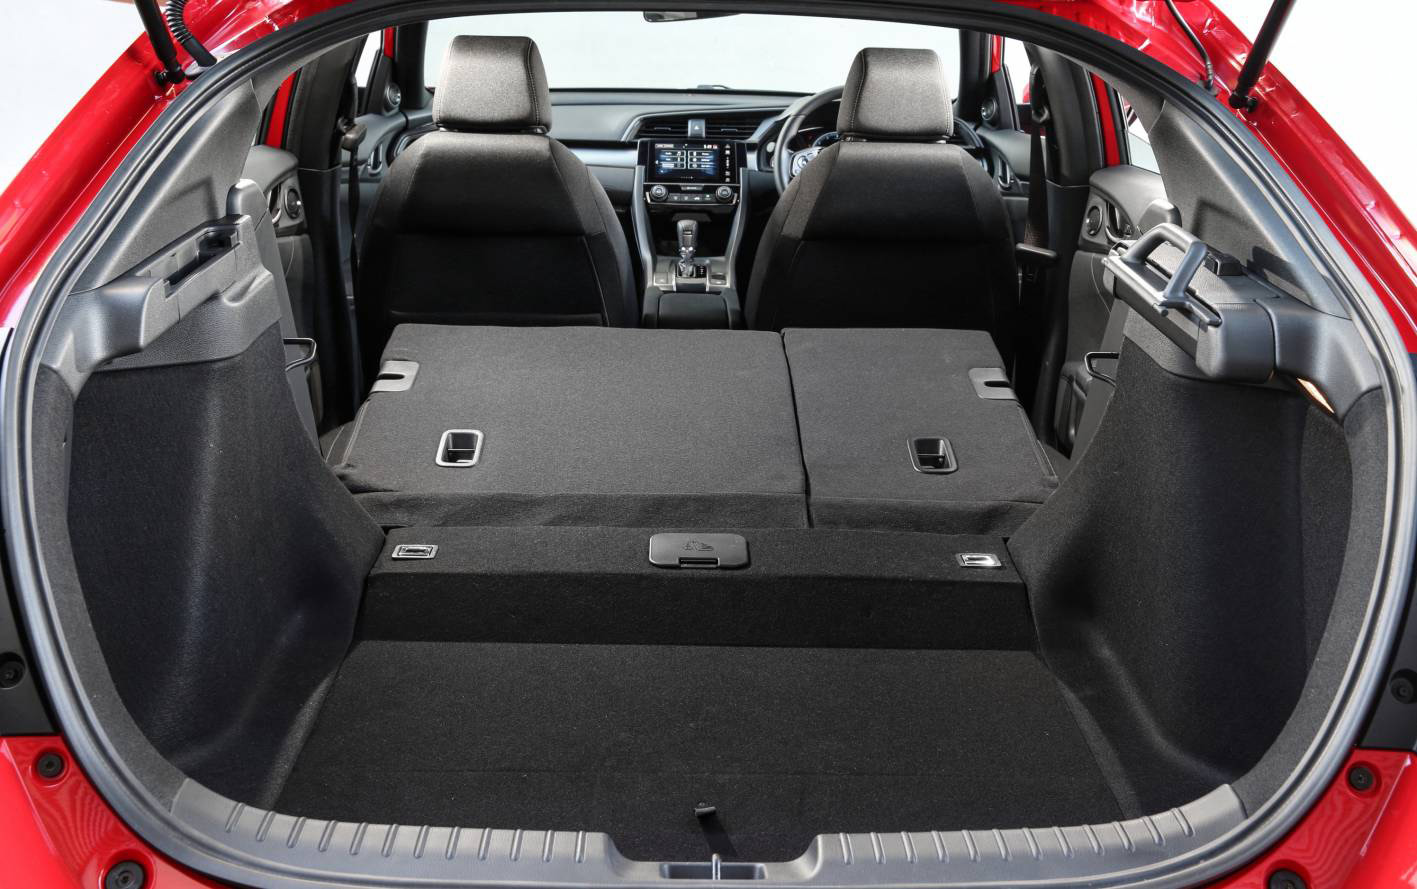 Honda civic hatchback dimensions